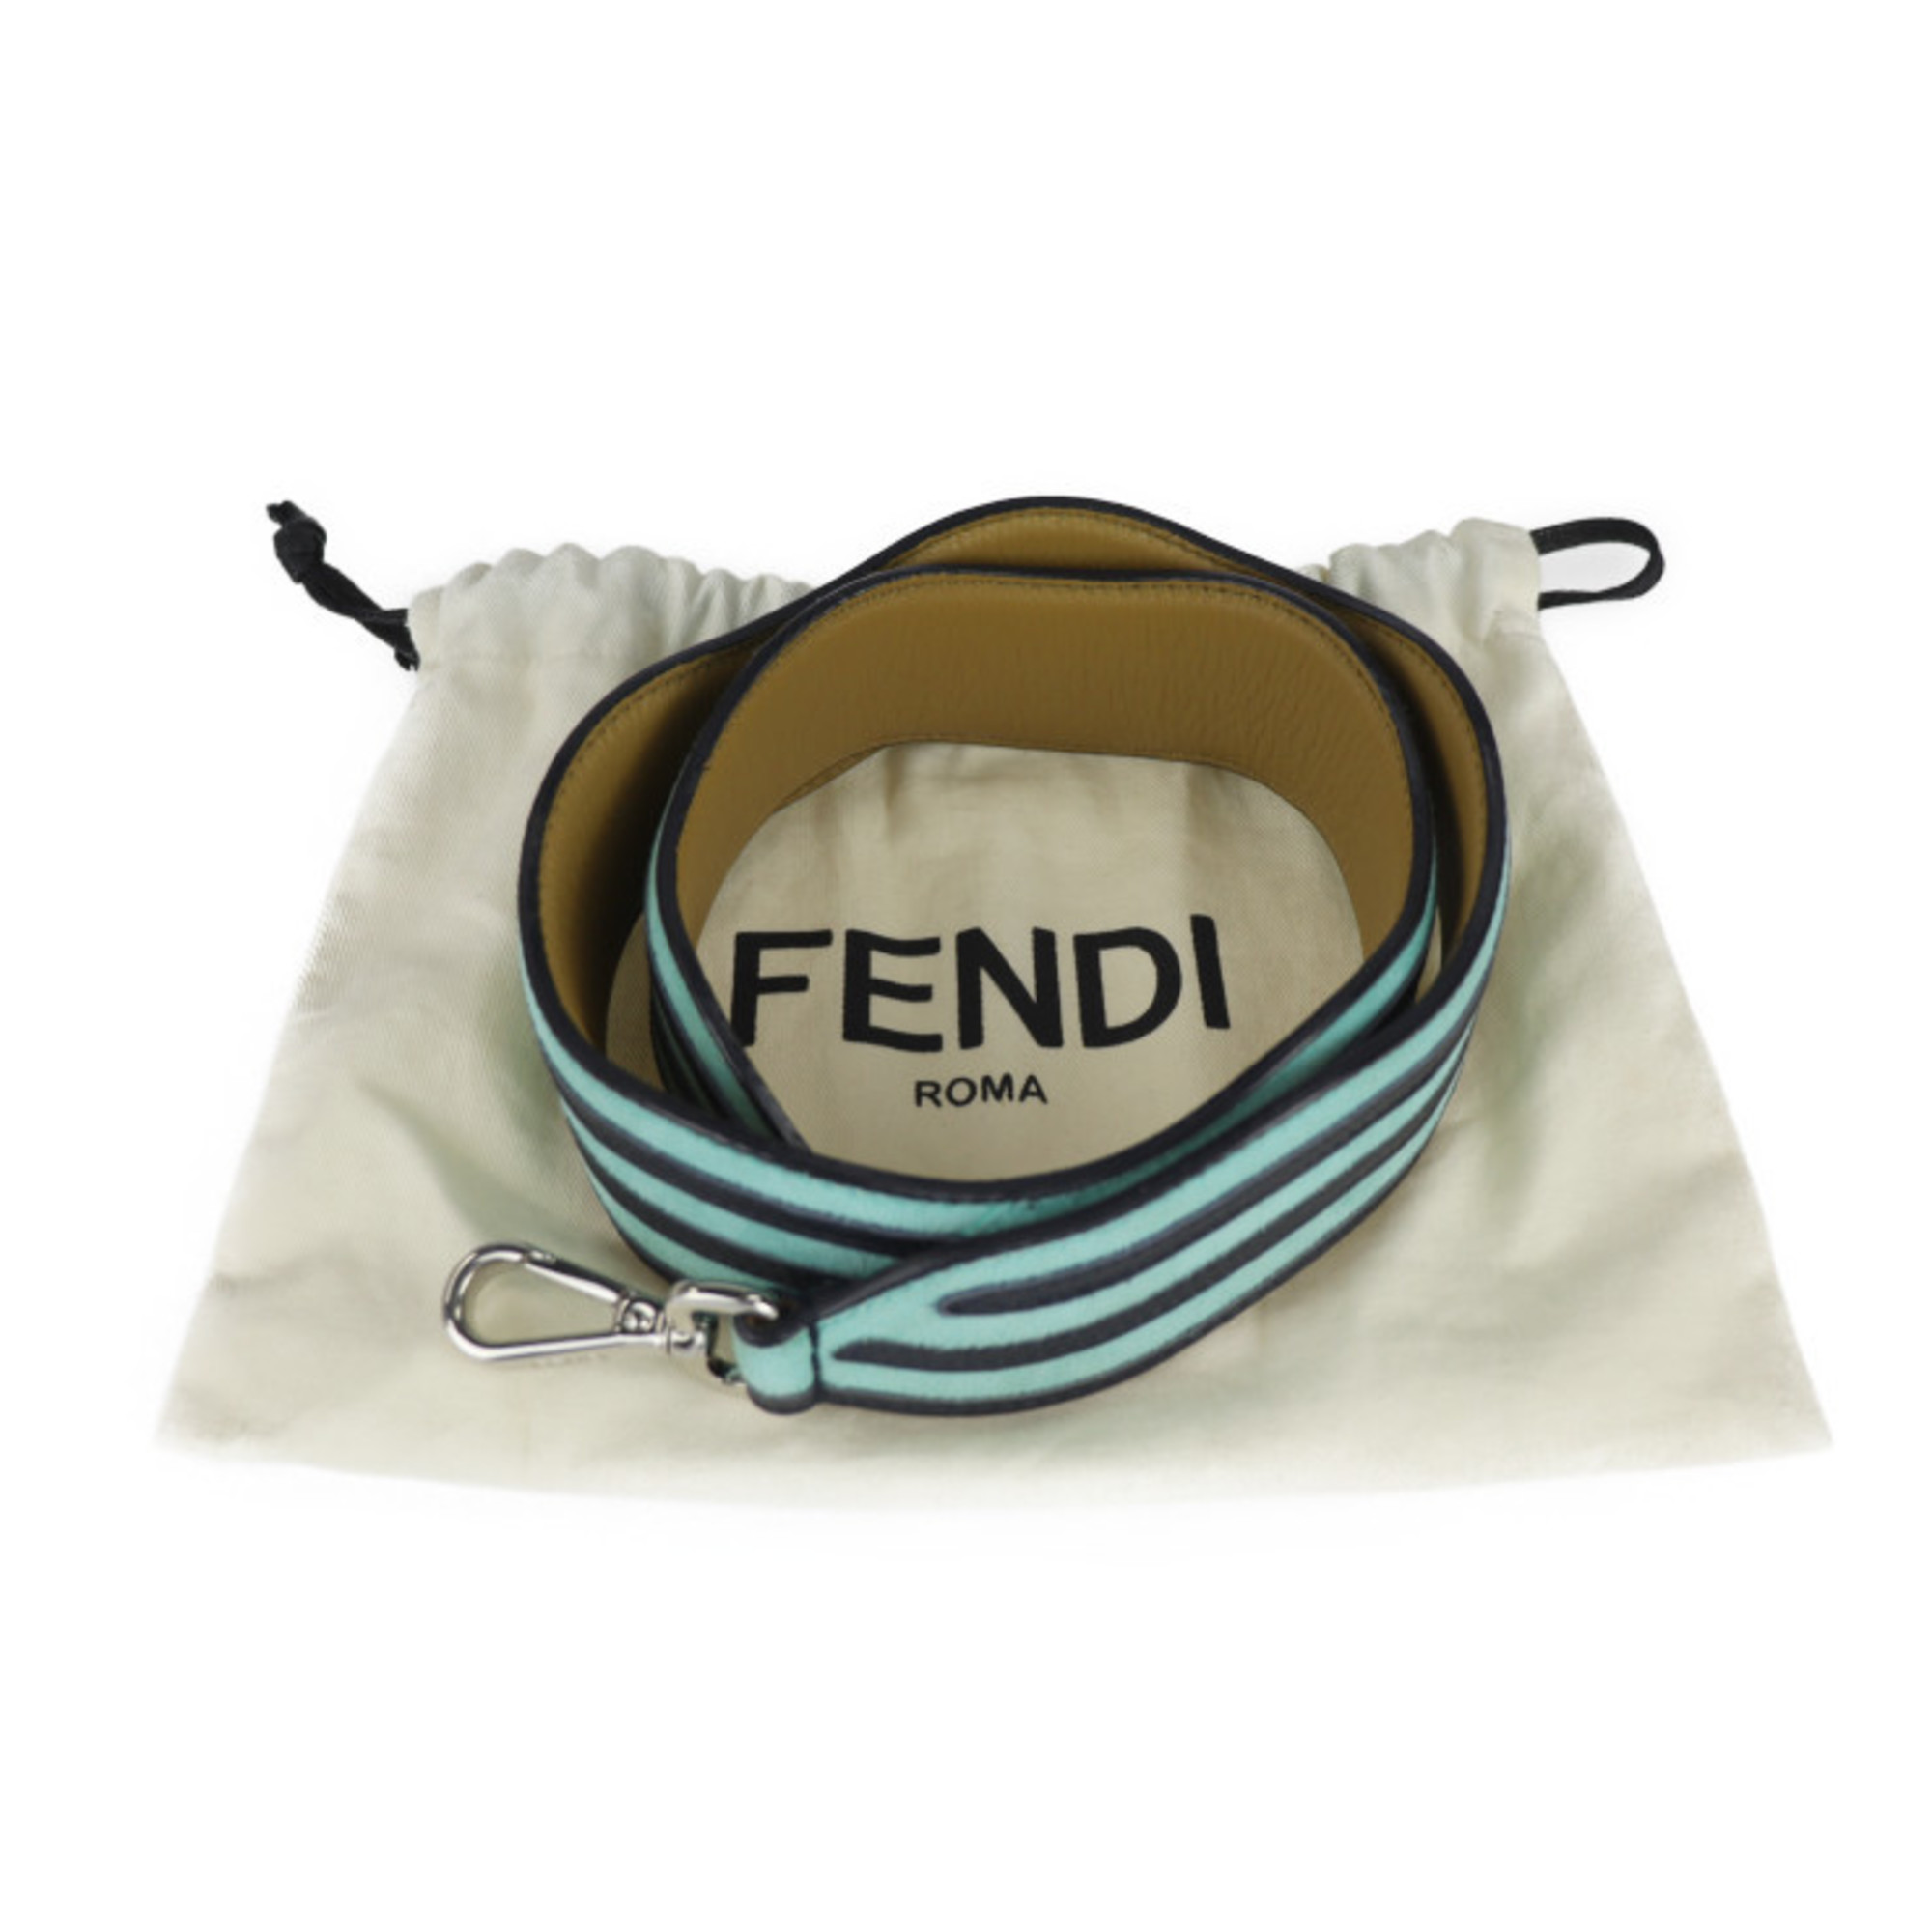 FENDI Fendi Strap You Shoulder Suede Leather Light Green Dark Navy Silver Hardware Wave Replacement